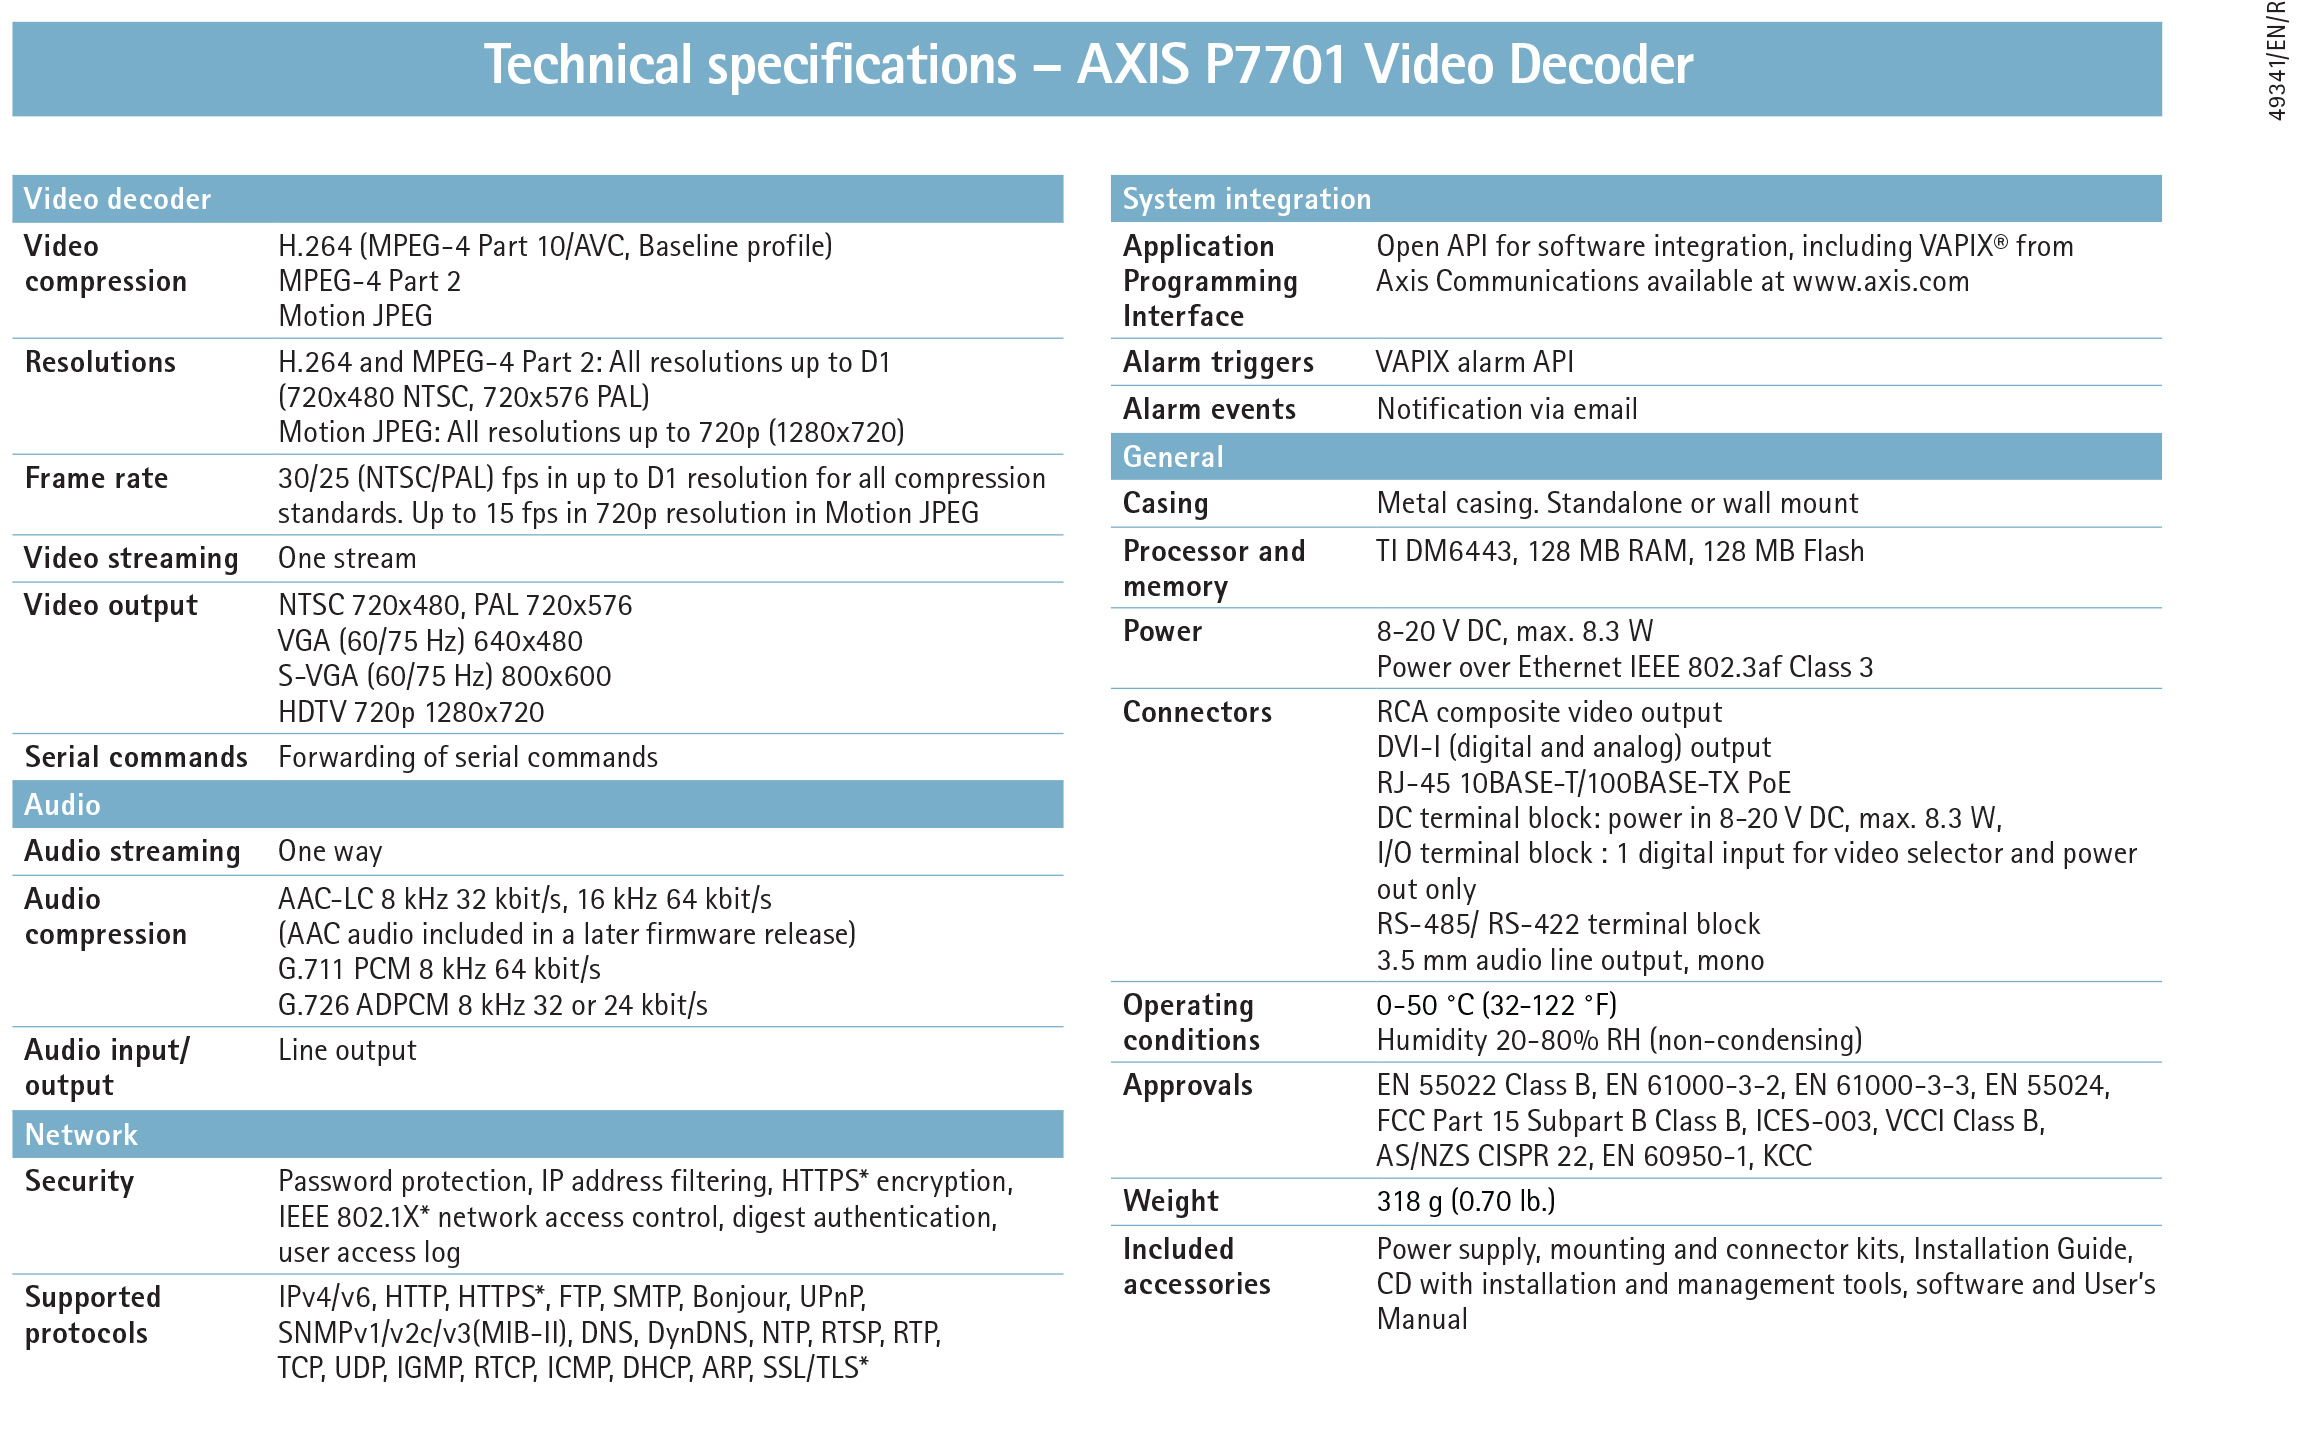 AXIS P7701 Video Decoder